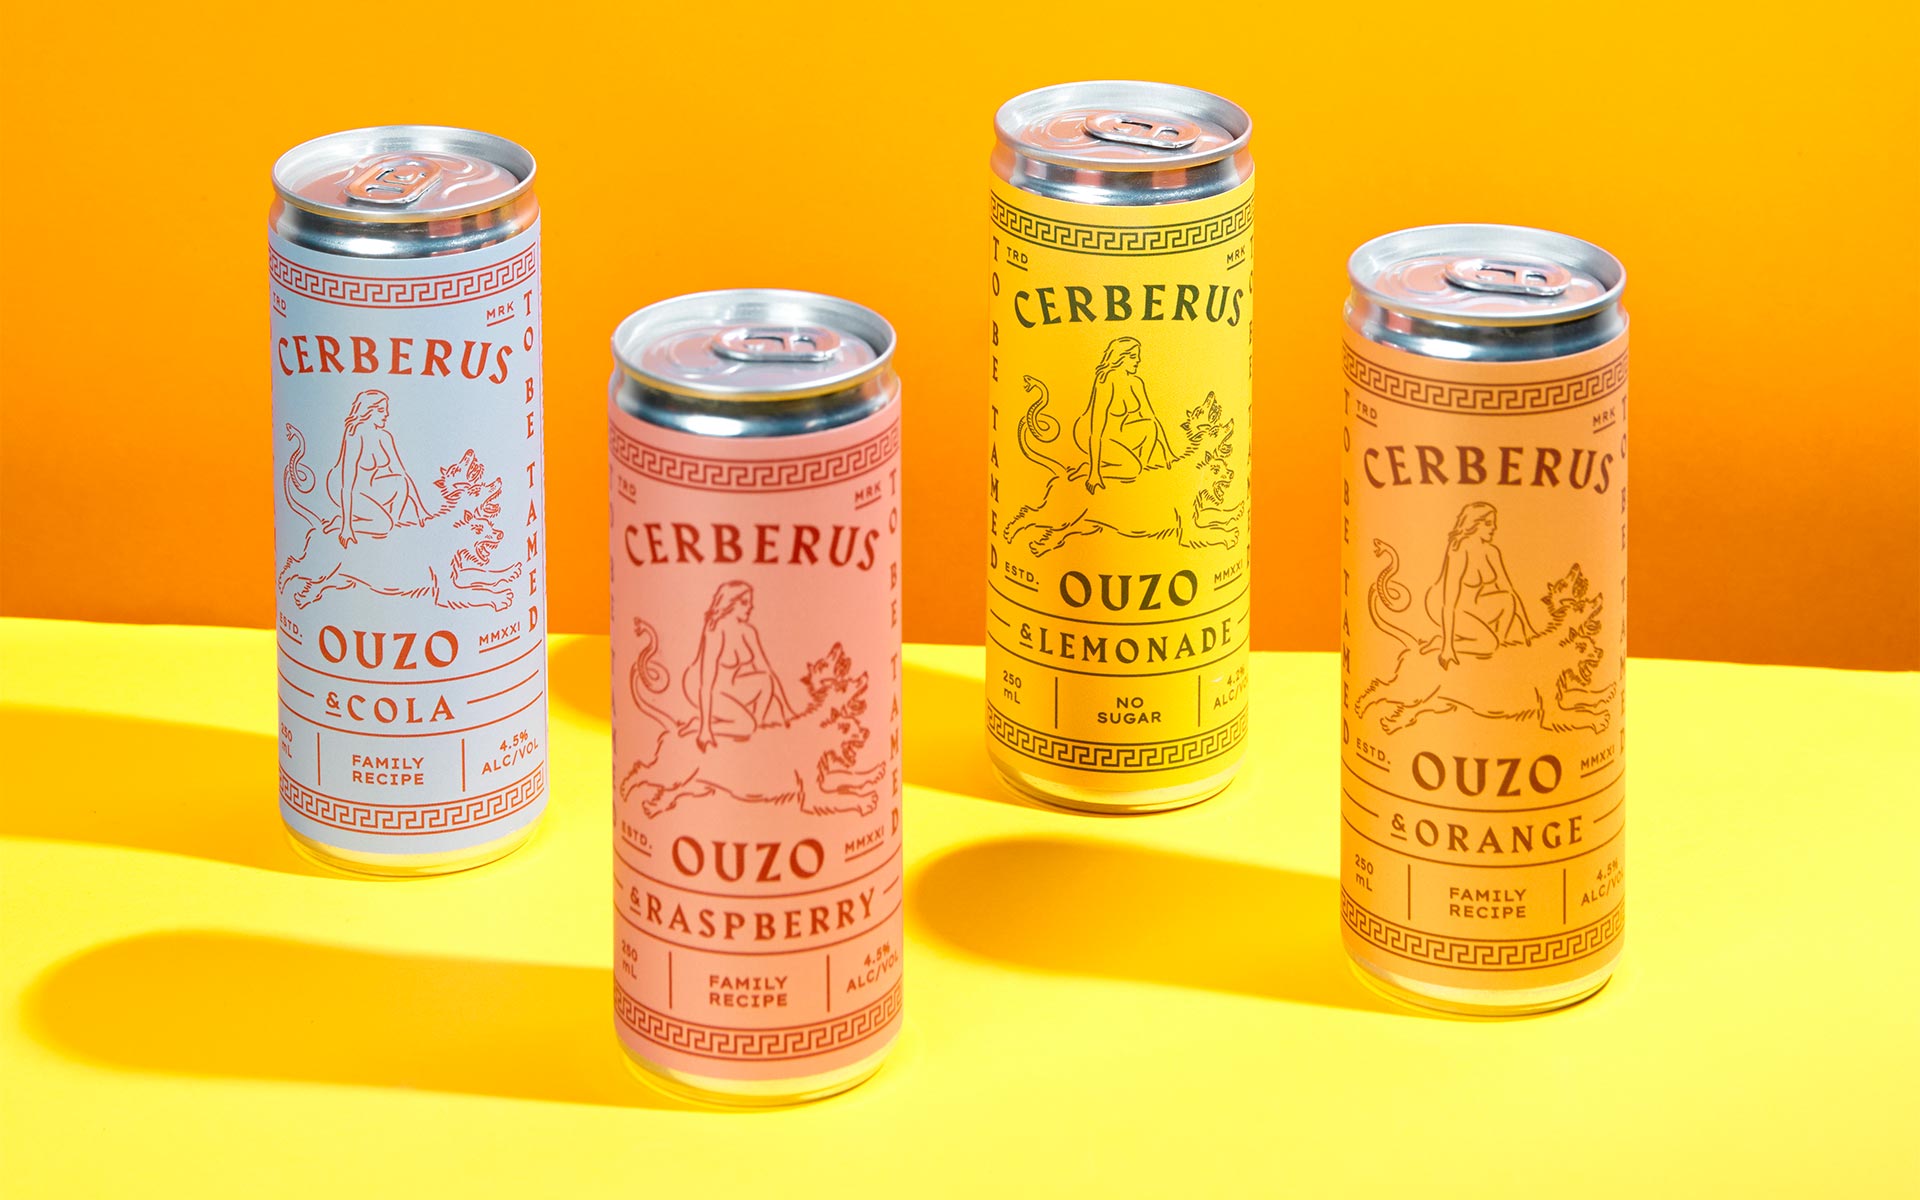 Cerberus Ouzo ready to drink range